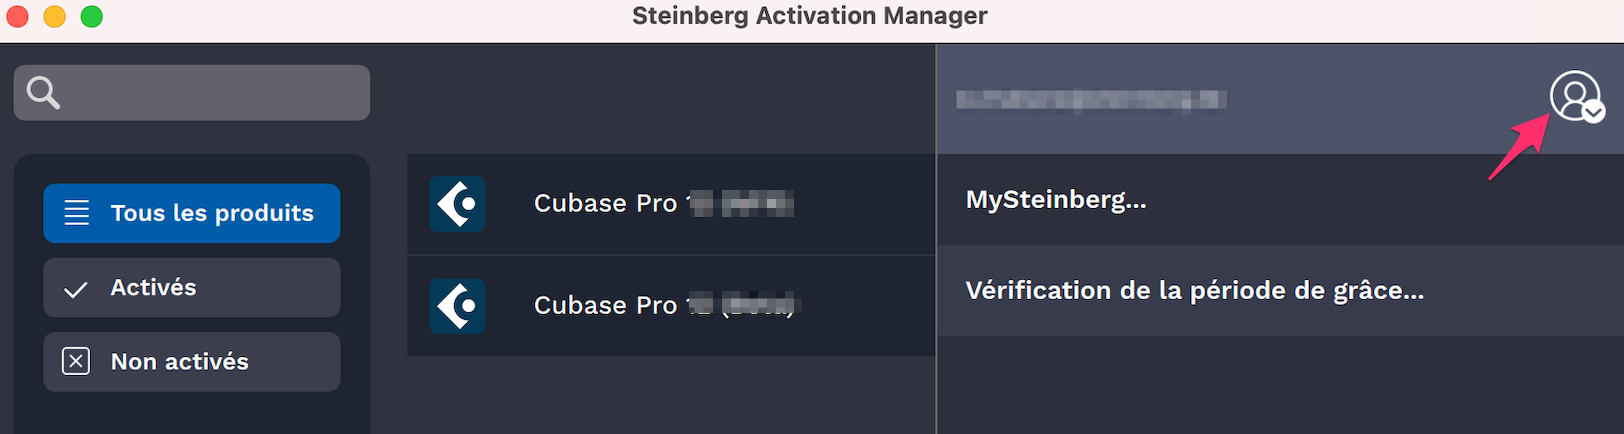 Steinberg_Activation_Manager_-_GP_check_Login_FR.png